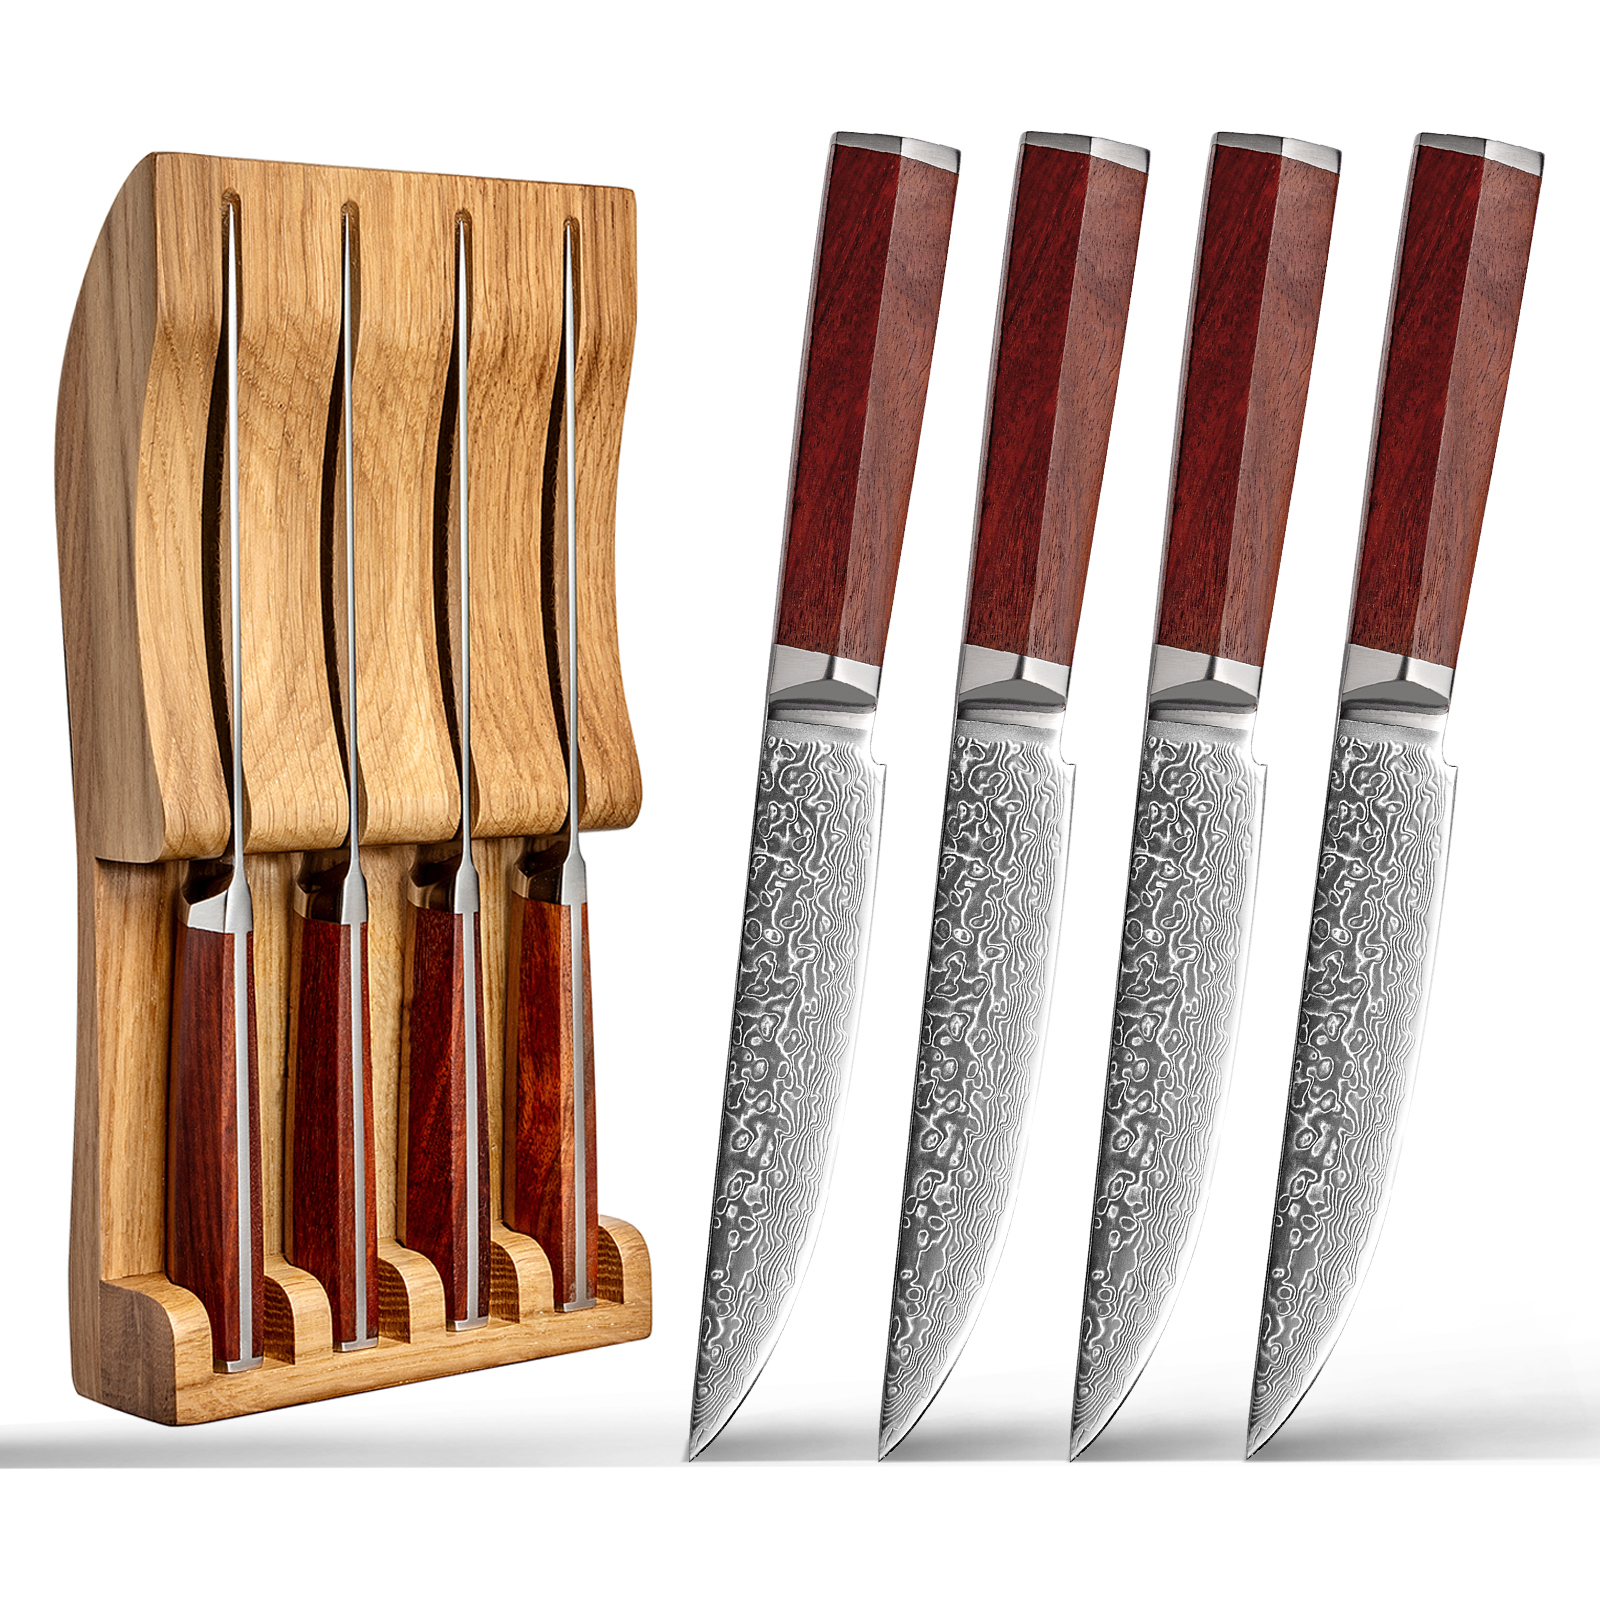 https://img-va.myshopline.com/image/store/2000714577/1648111340947/4-Piece-Damascus-Steak-Knife-Set-With-Wood-Drawer-Organizer-Insert-(1).jpeg?w=1600&h=1600